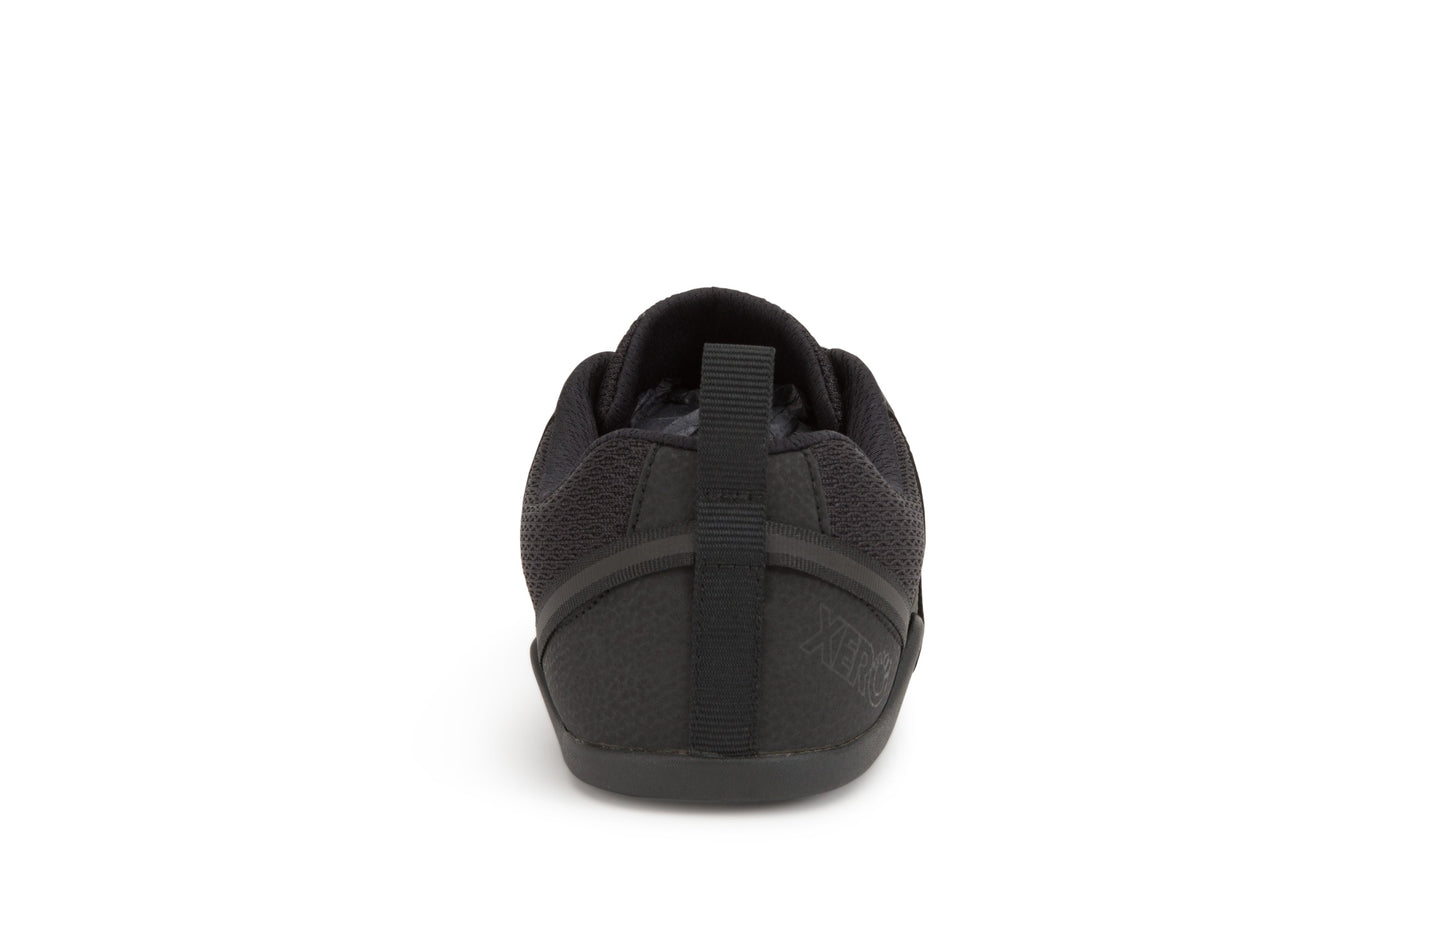 Xero Shoes Prio Womens barfods træningssko til kvinder i farven black, bagfra